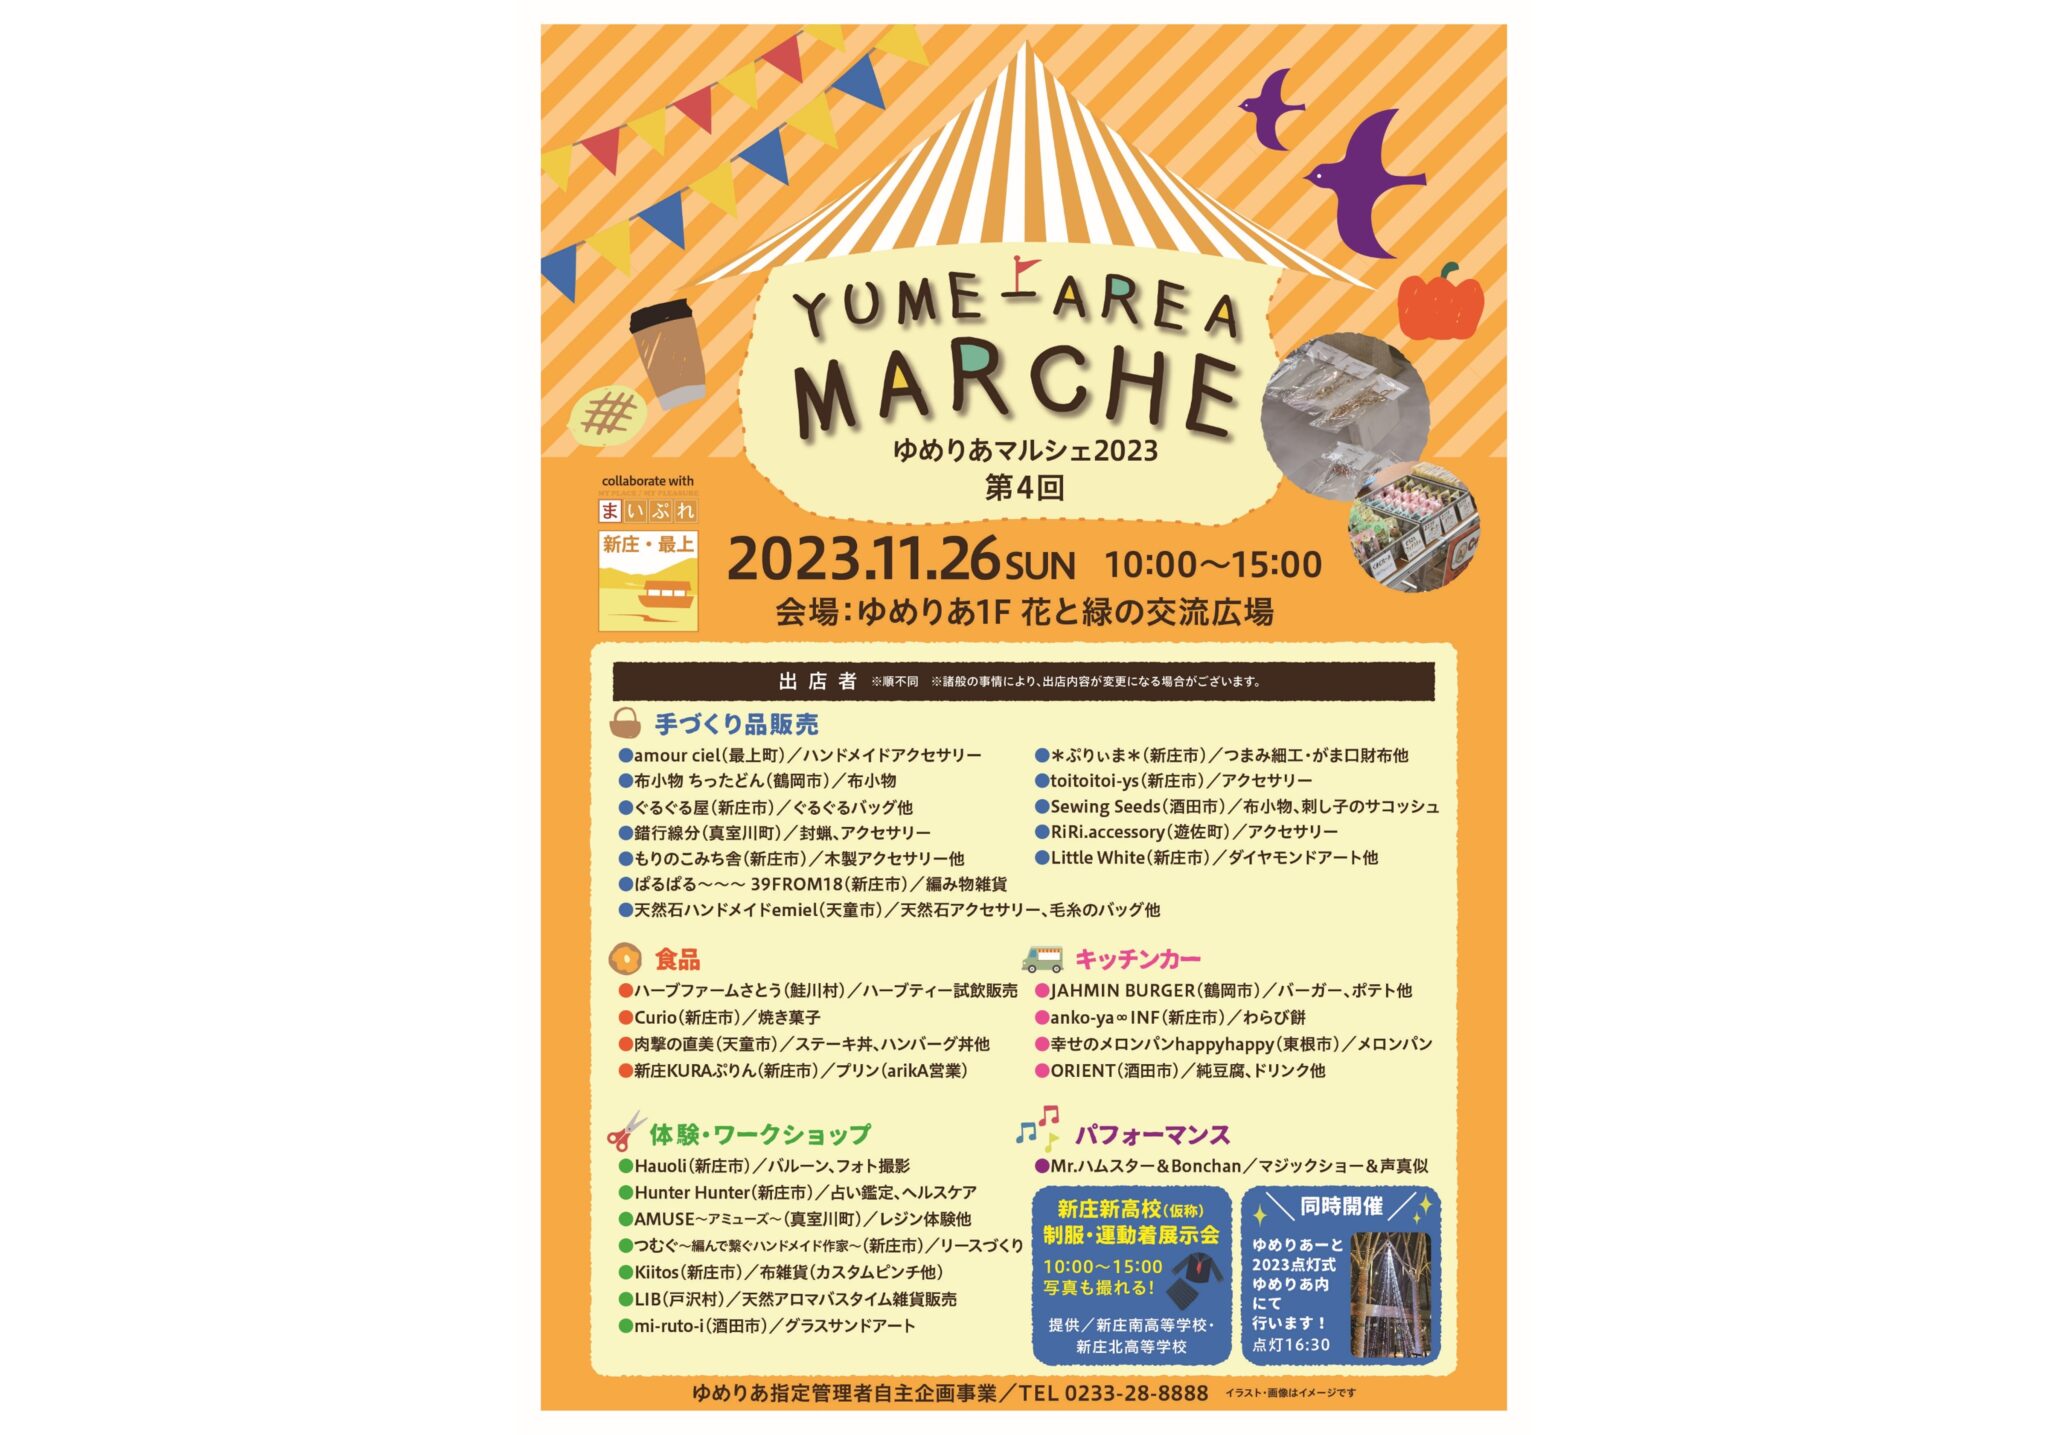 Yume Area Market 2023